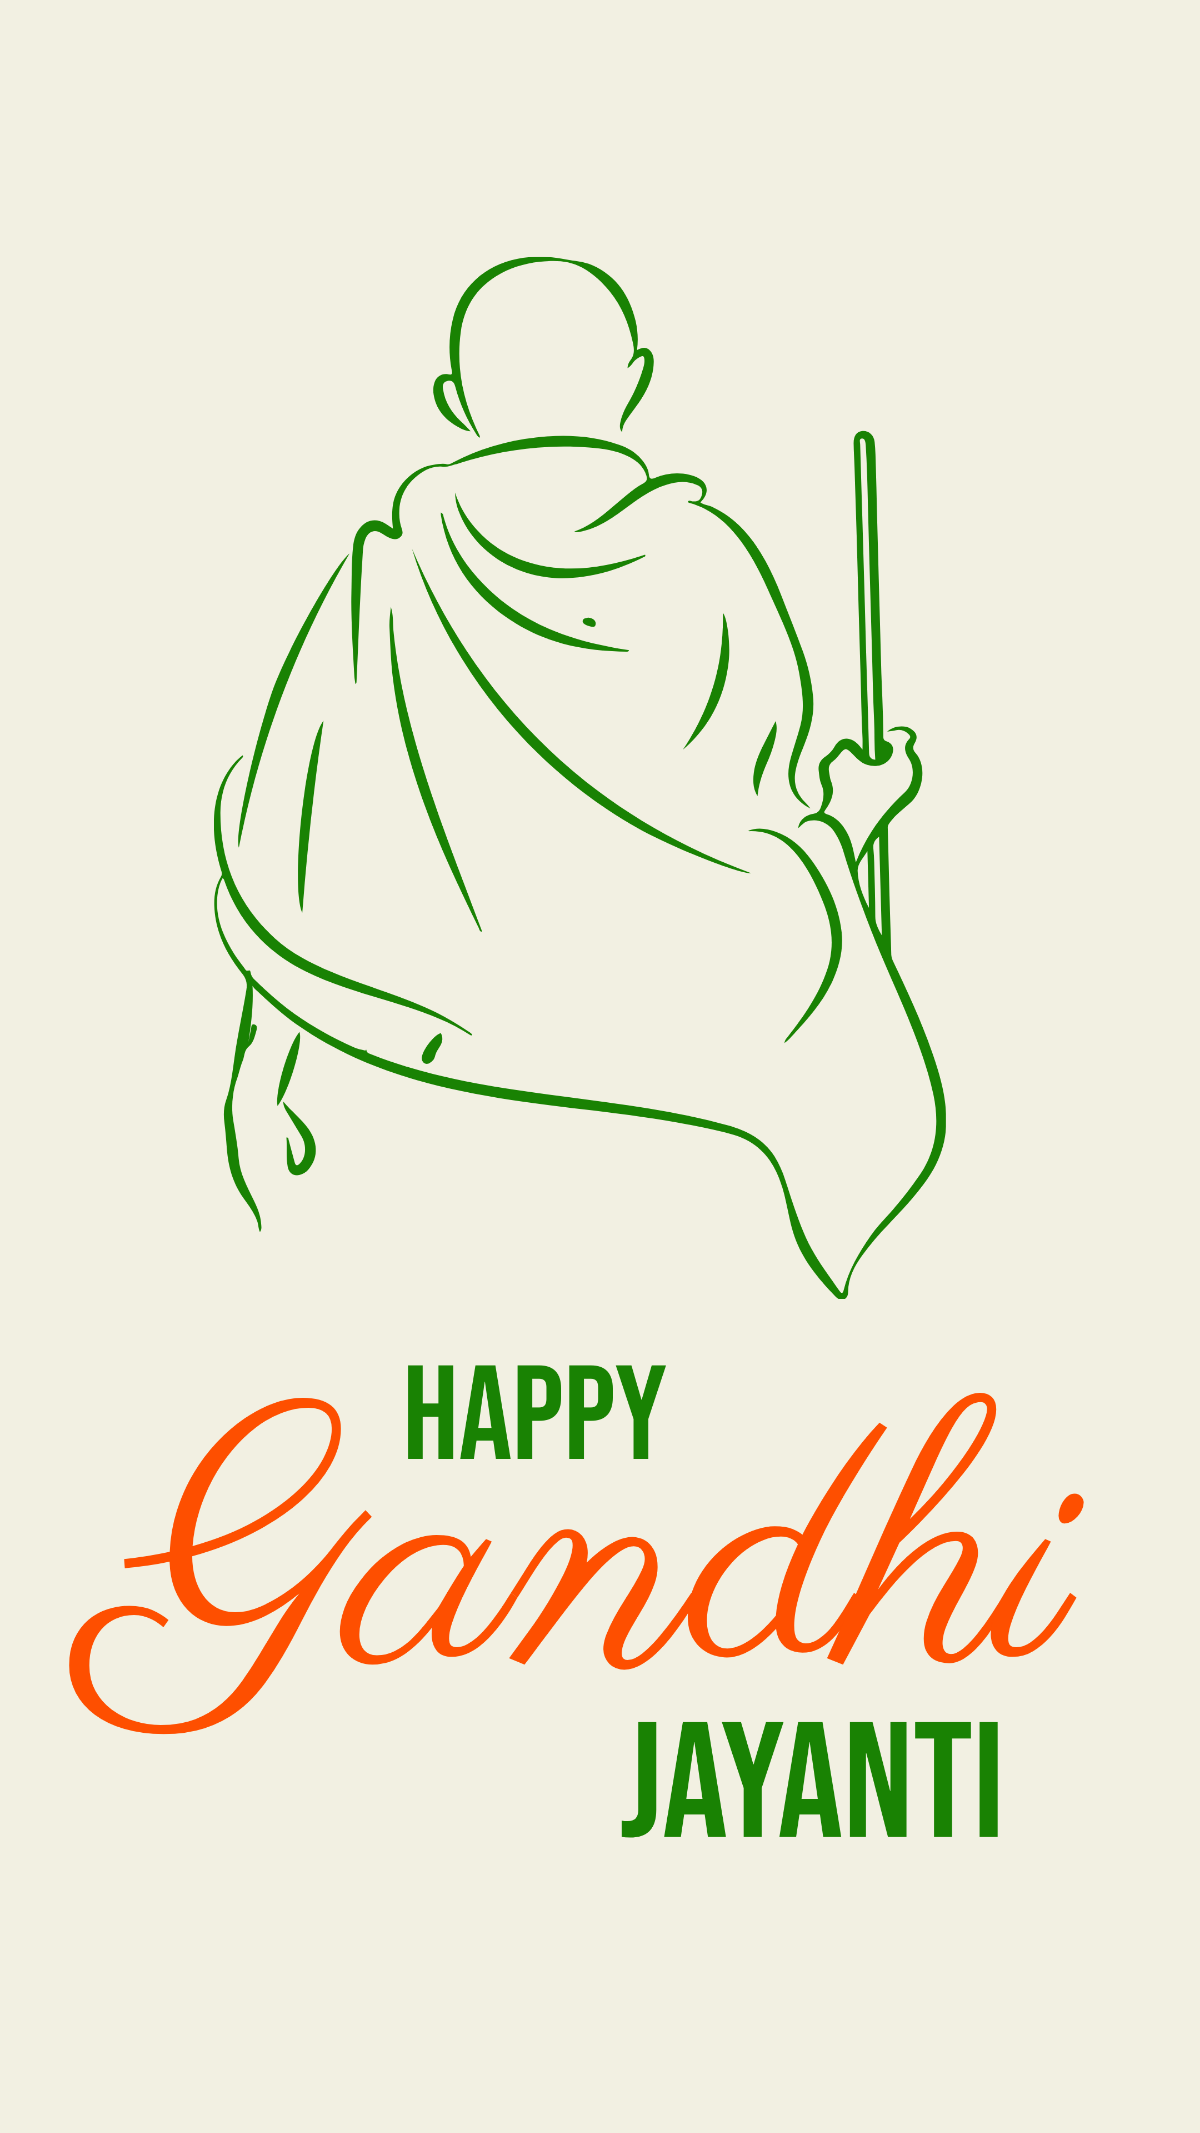 Gandhi Jayanti iPhone Background Template